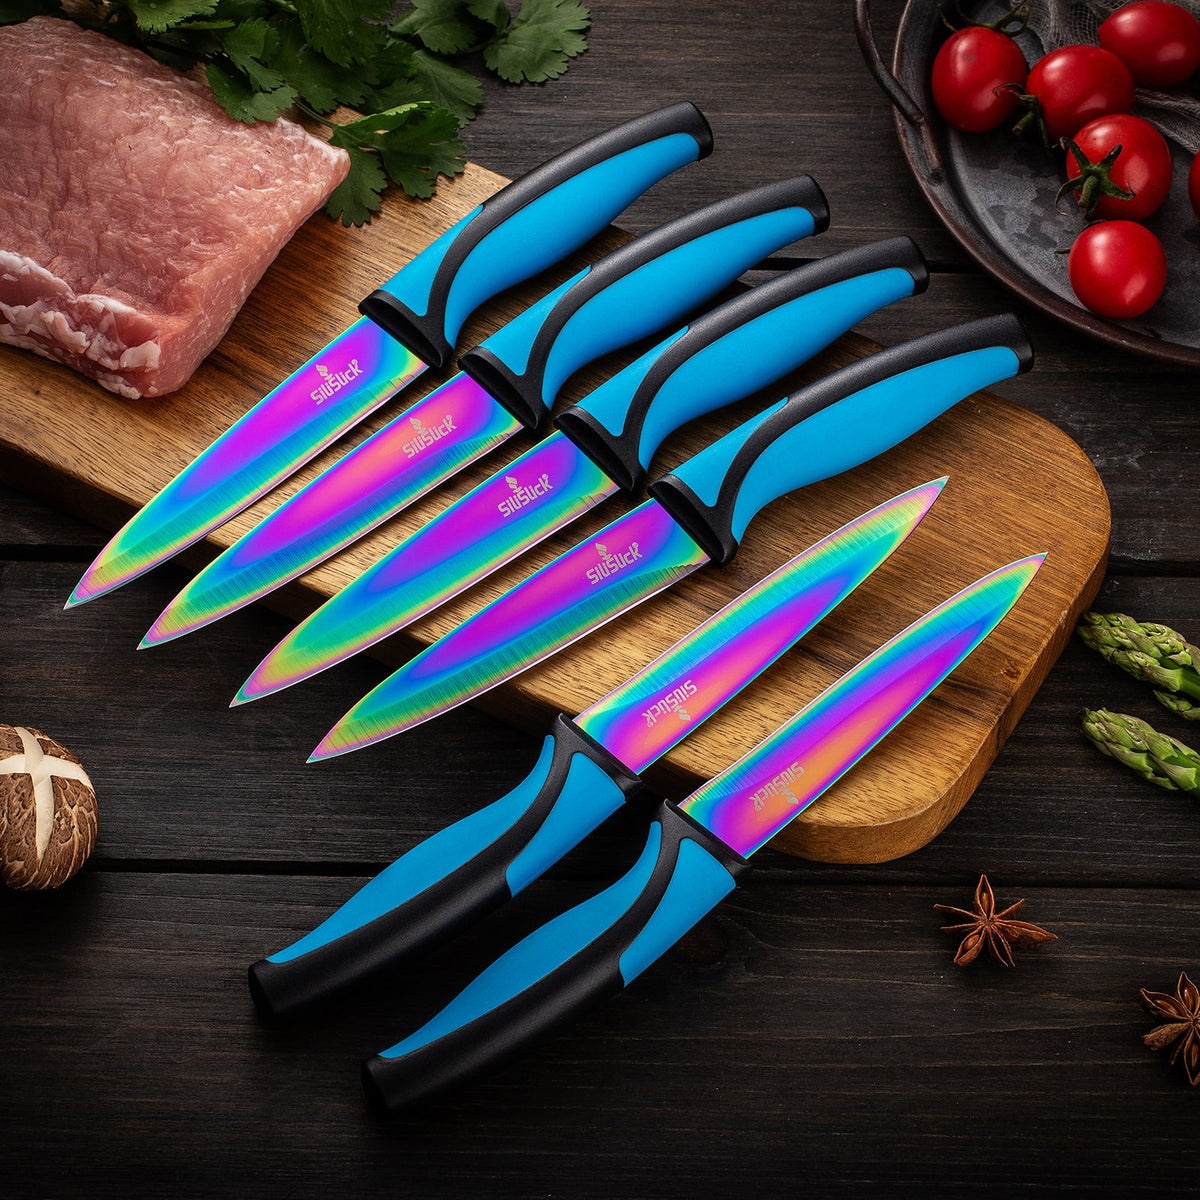 SiliSlick 4 Piece Blue Steak Knife Set - Stainless Steel Blades